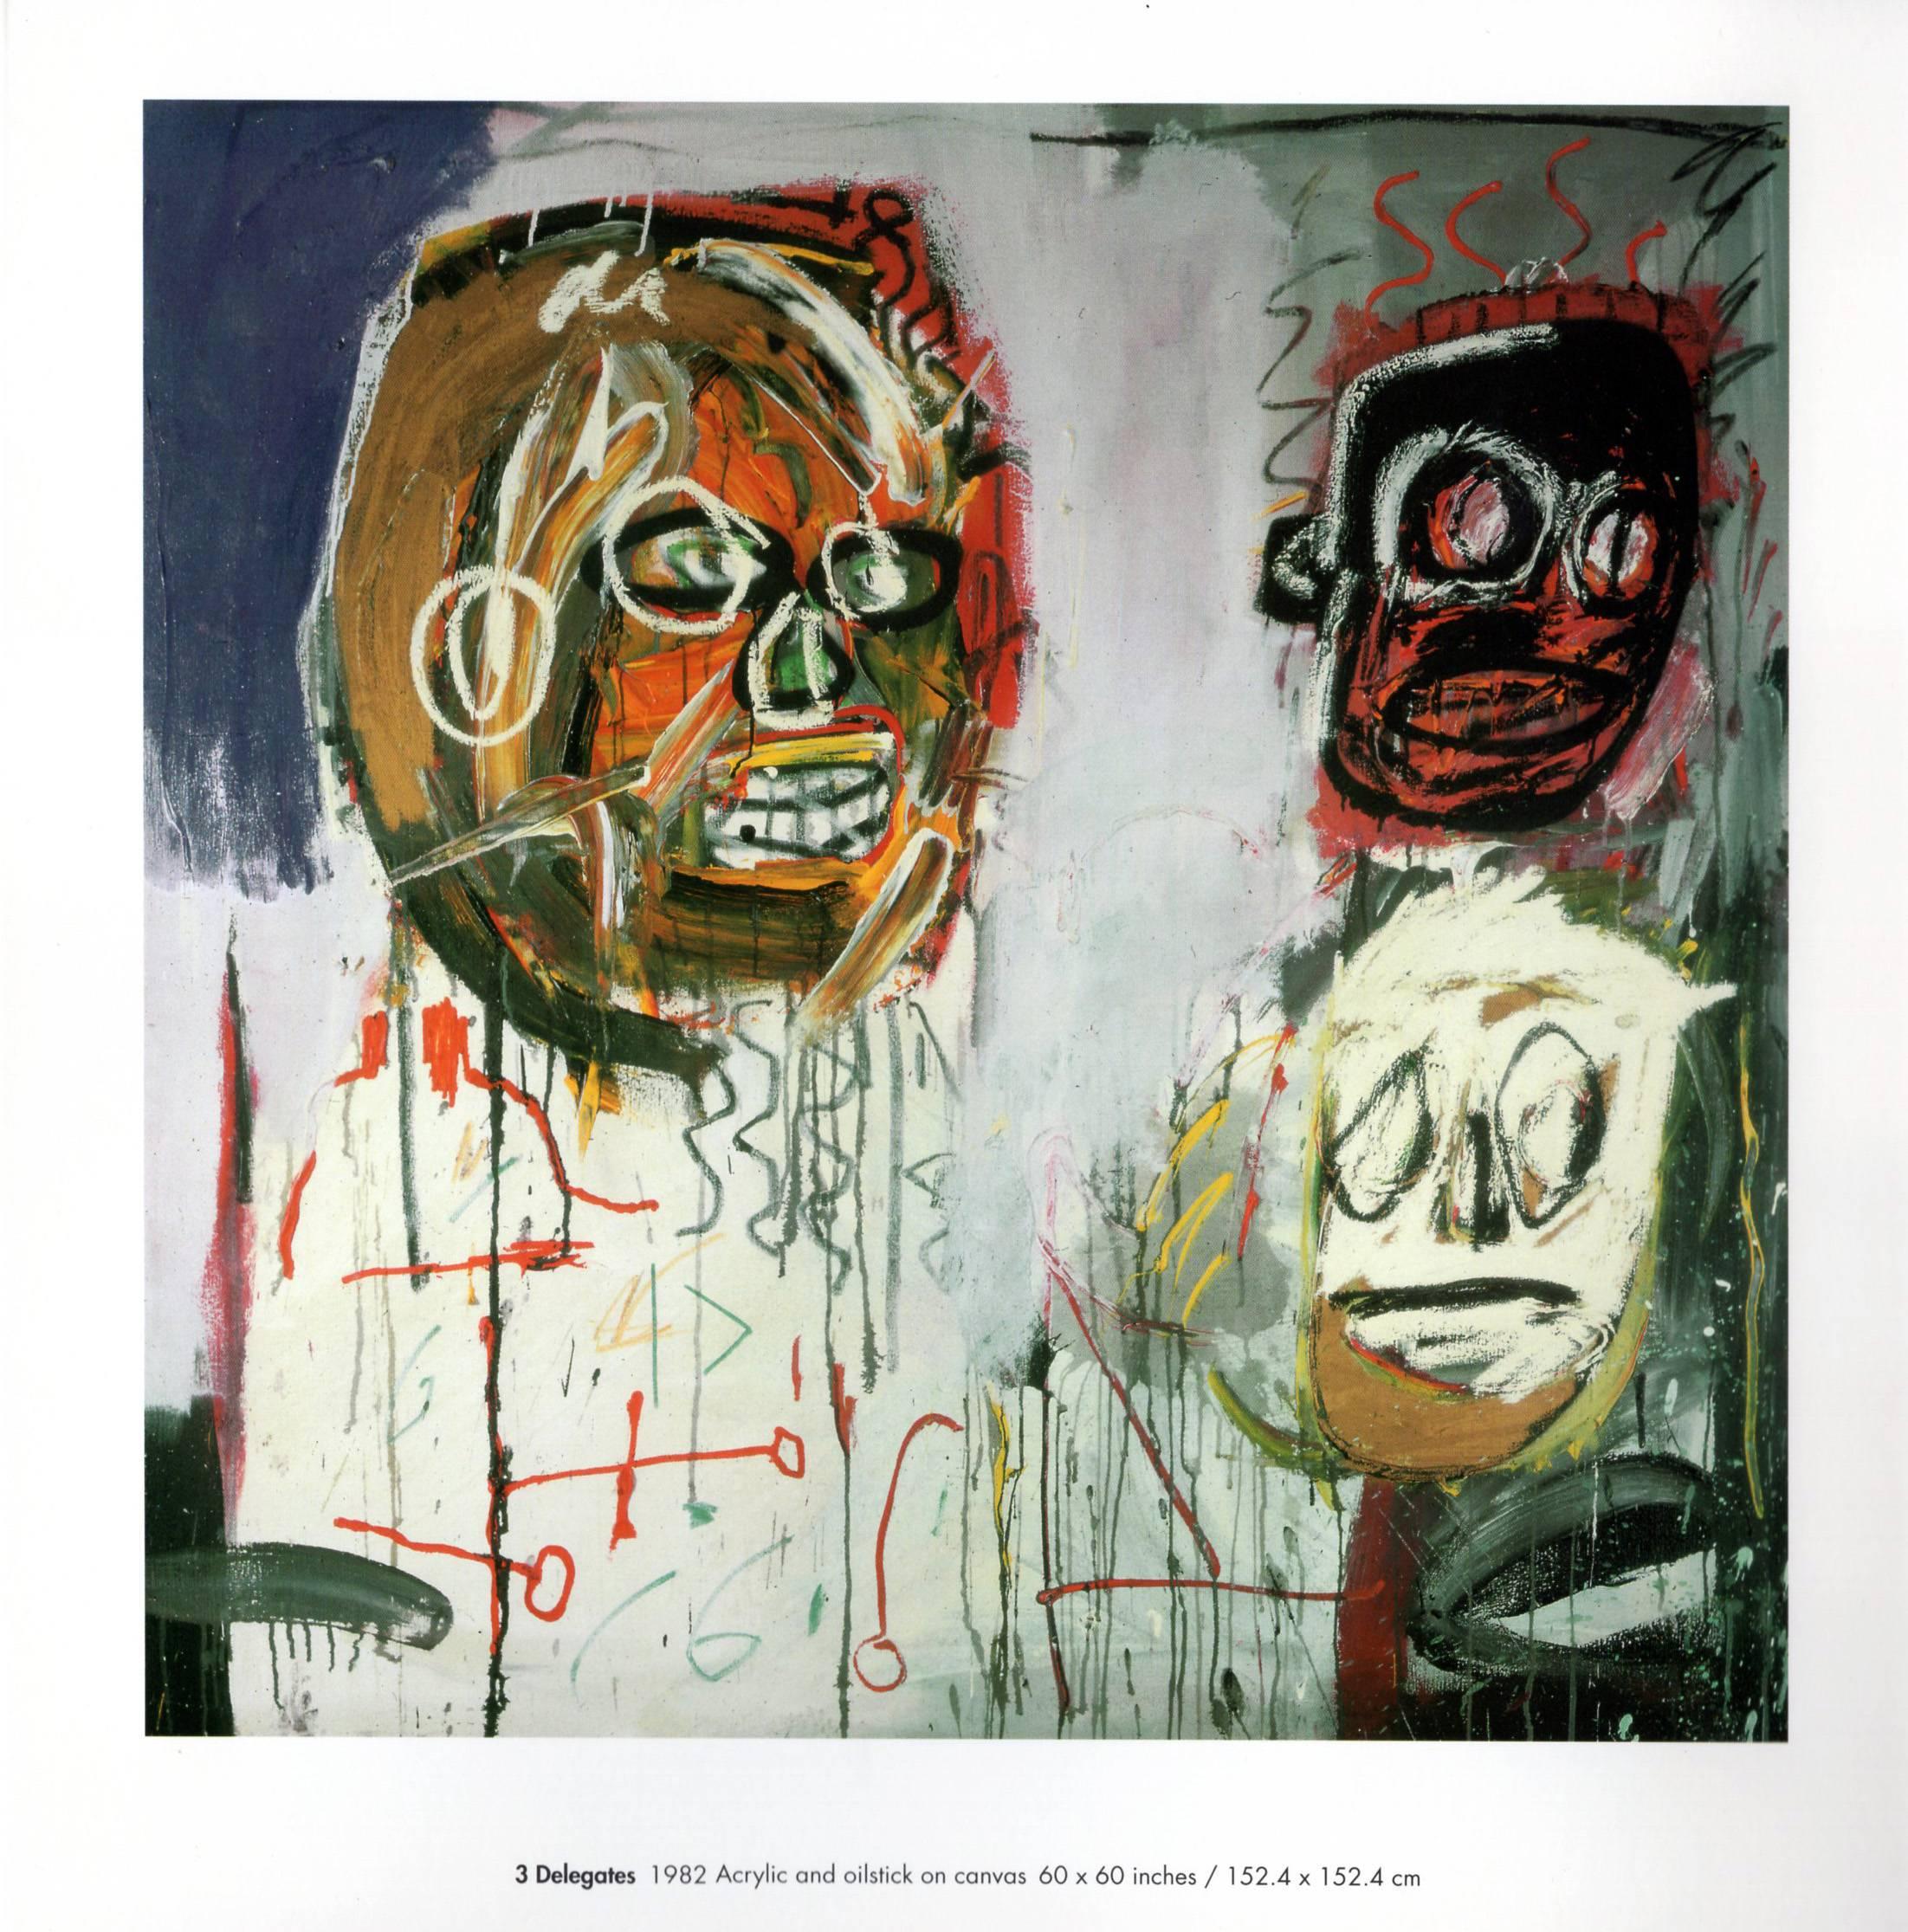 Basquiat announcement card/poster (Tony Shafrazi Gallery) 7